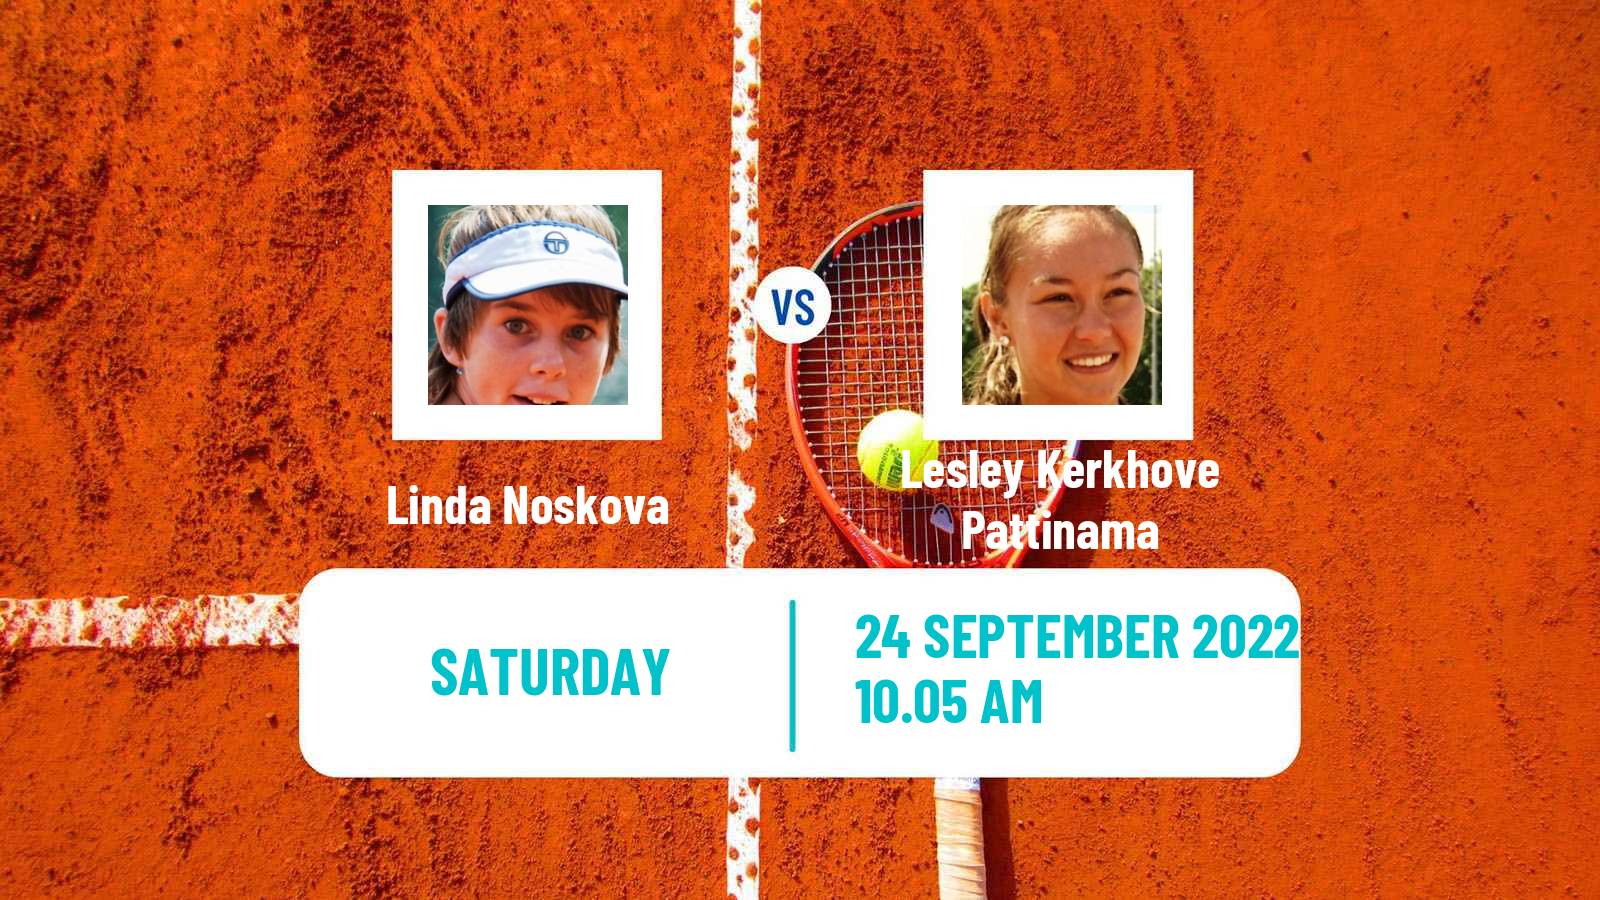 Tennis WTA Tallinn Linda Noskova - Lesley Kerkhove Pattinama